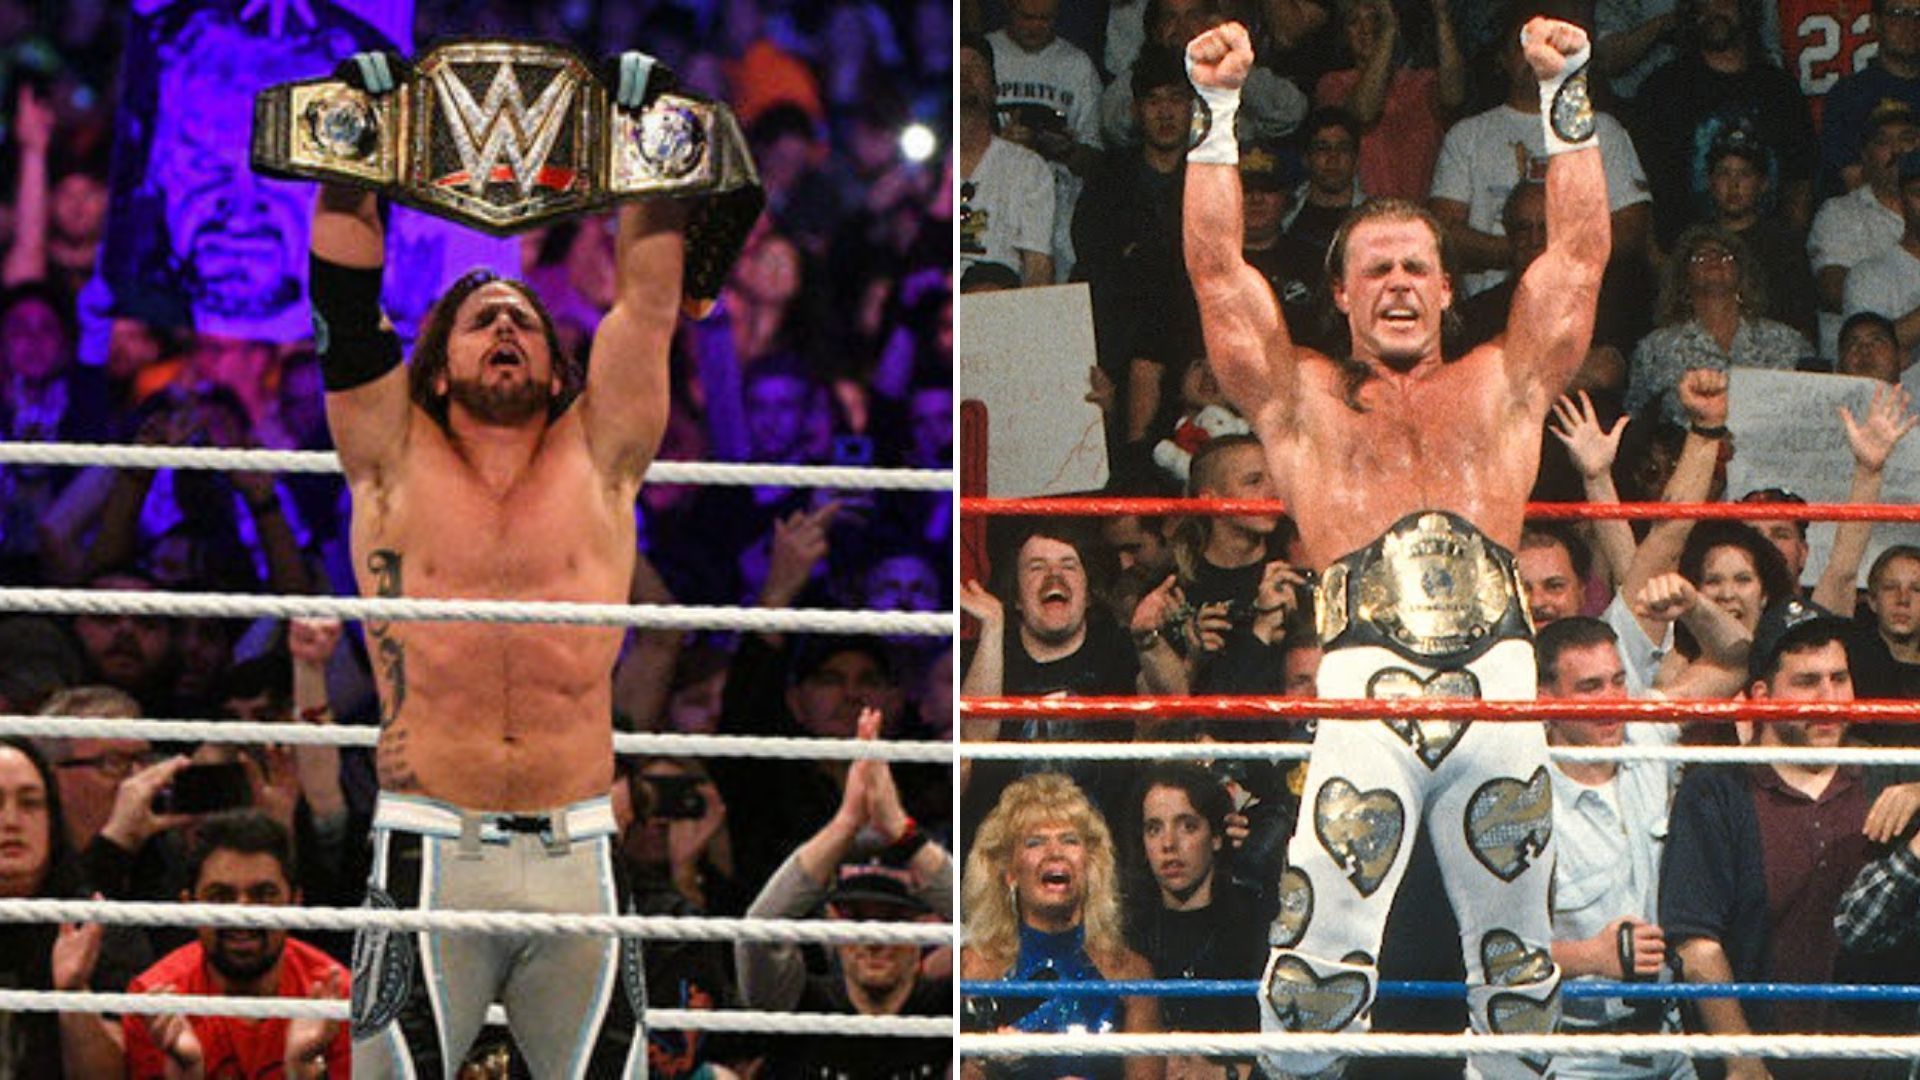 AJ Styles has drawn comparisons as the modern day Sawn Michaels